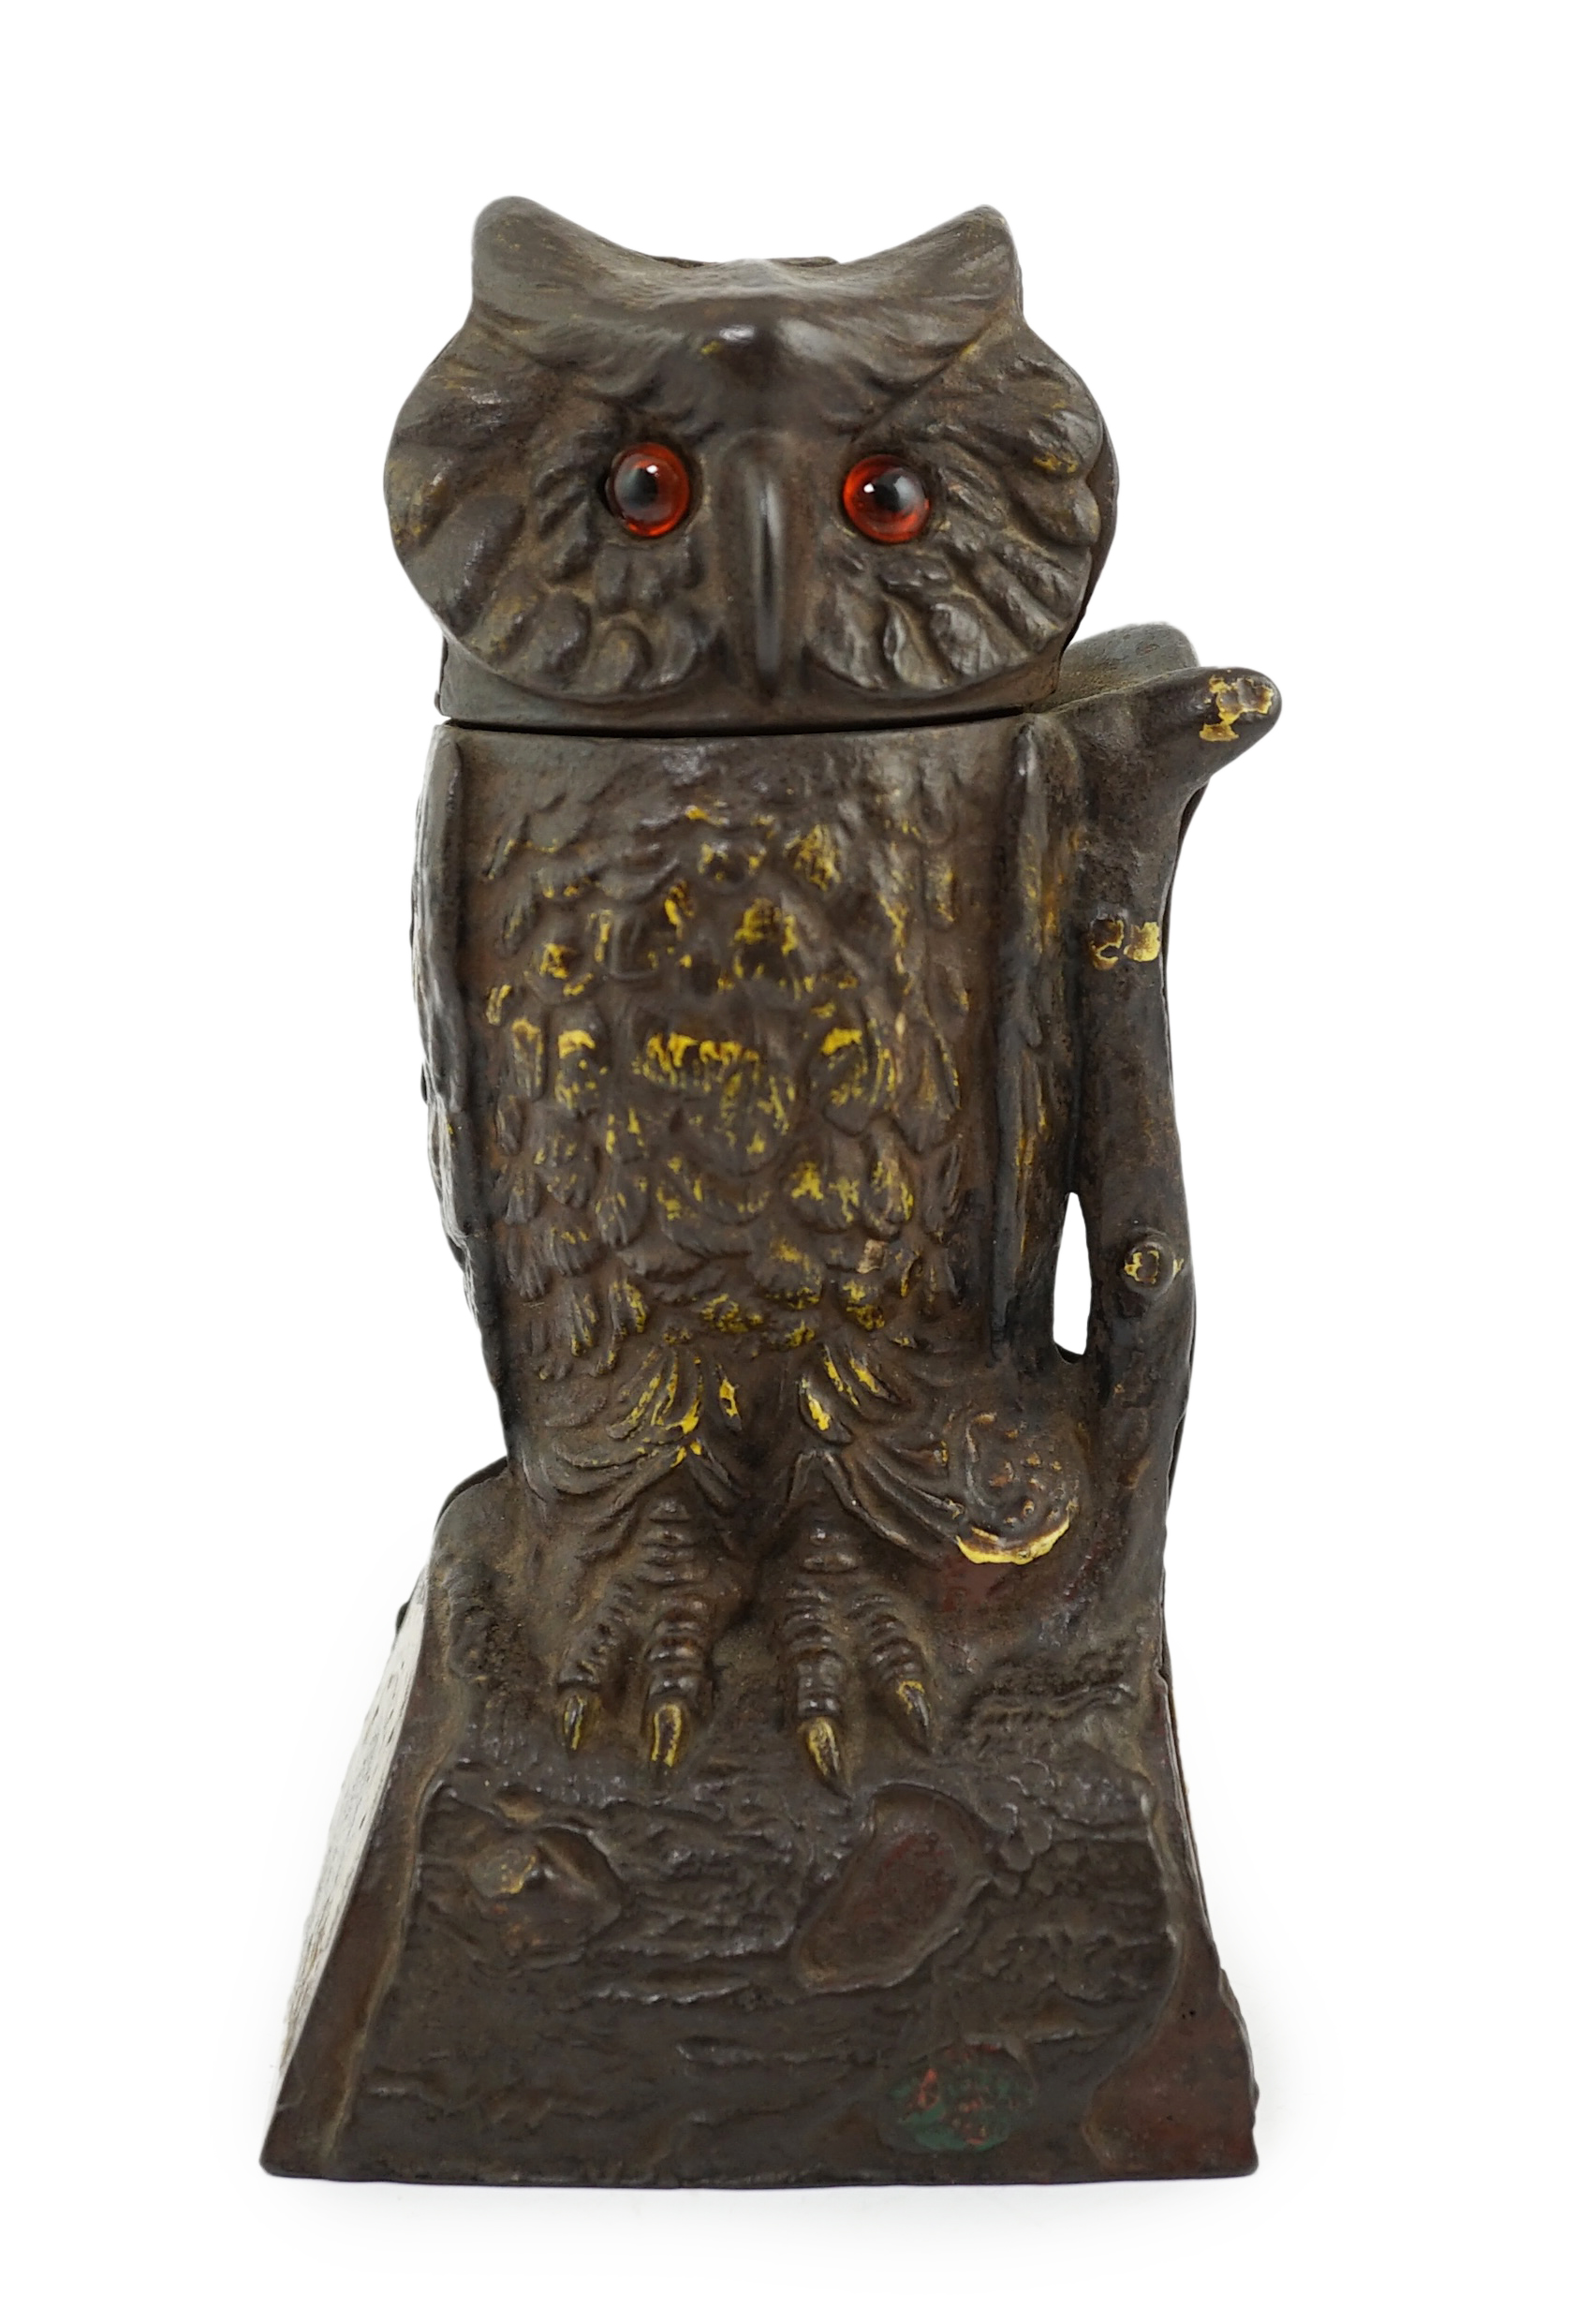 A late 19th century American cast iron owl Patent money box